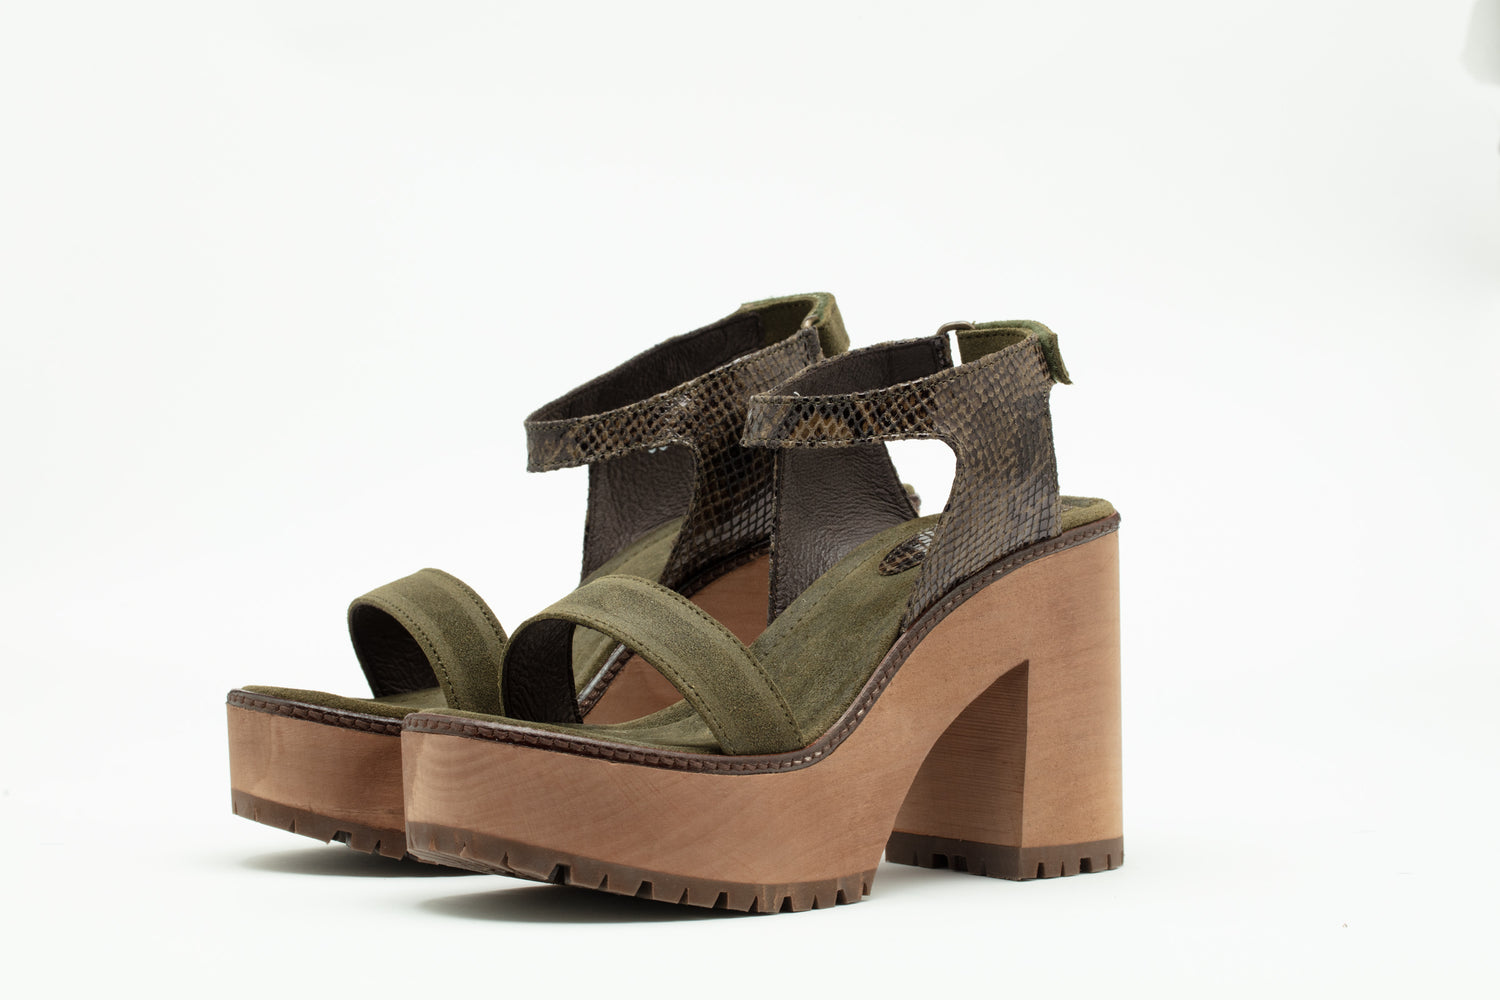 Sandal with wooden heel